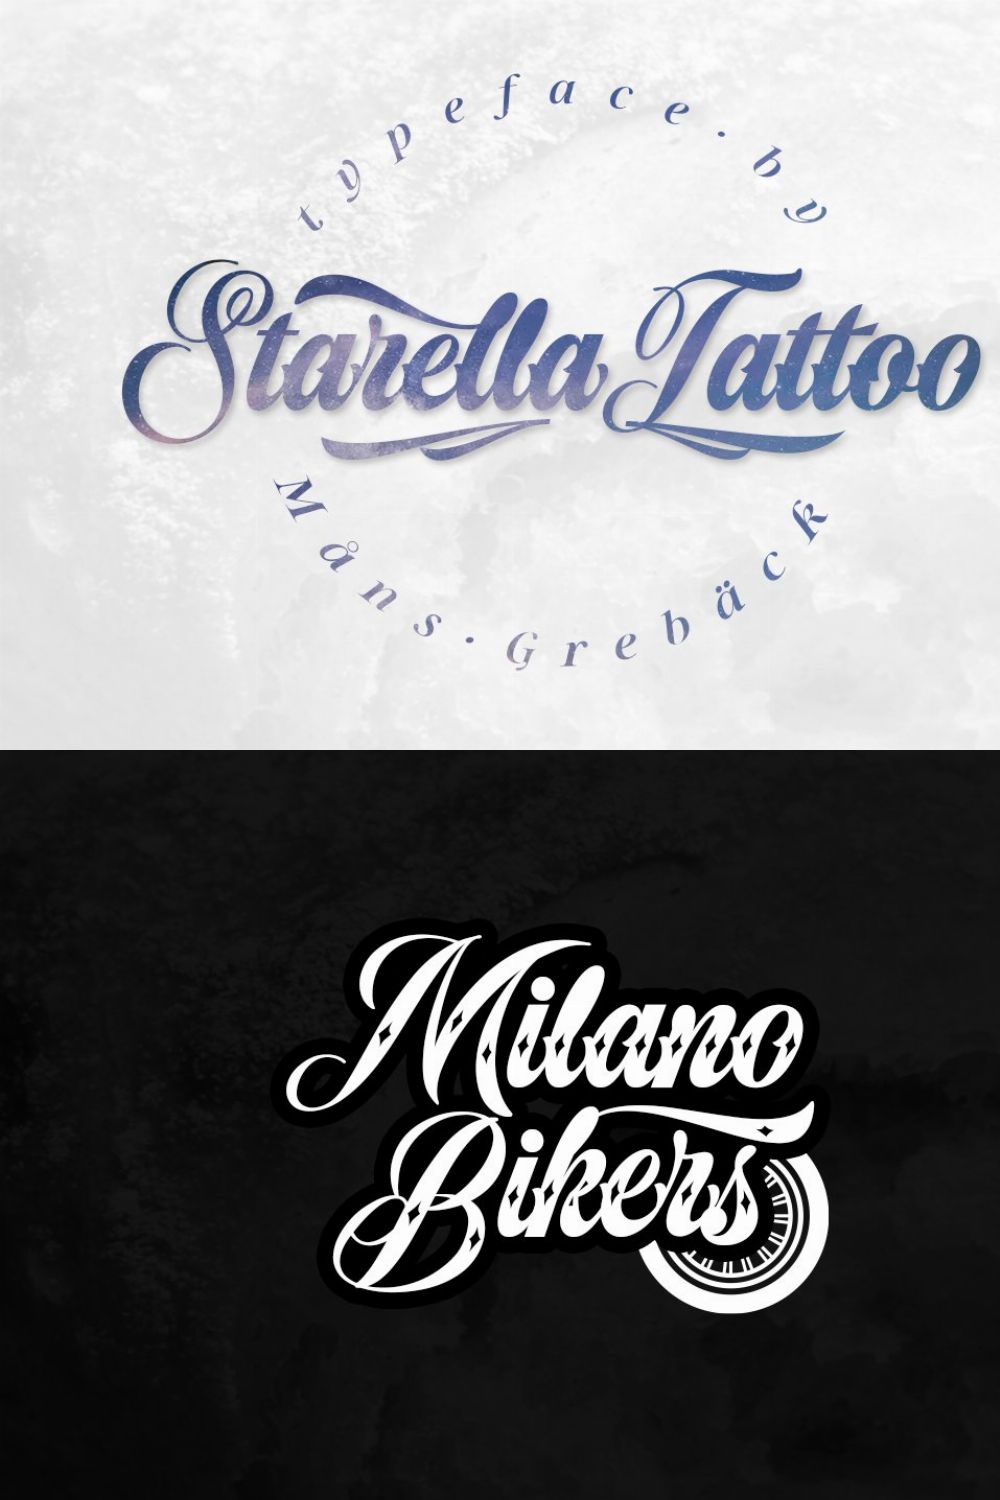 Starella Tattoo pinterest preview image.